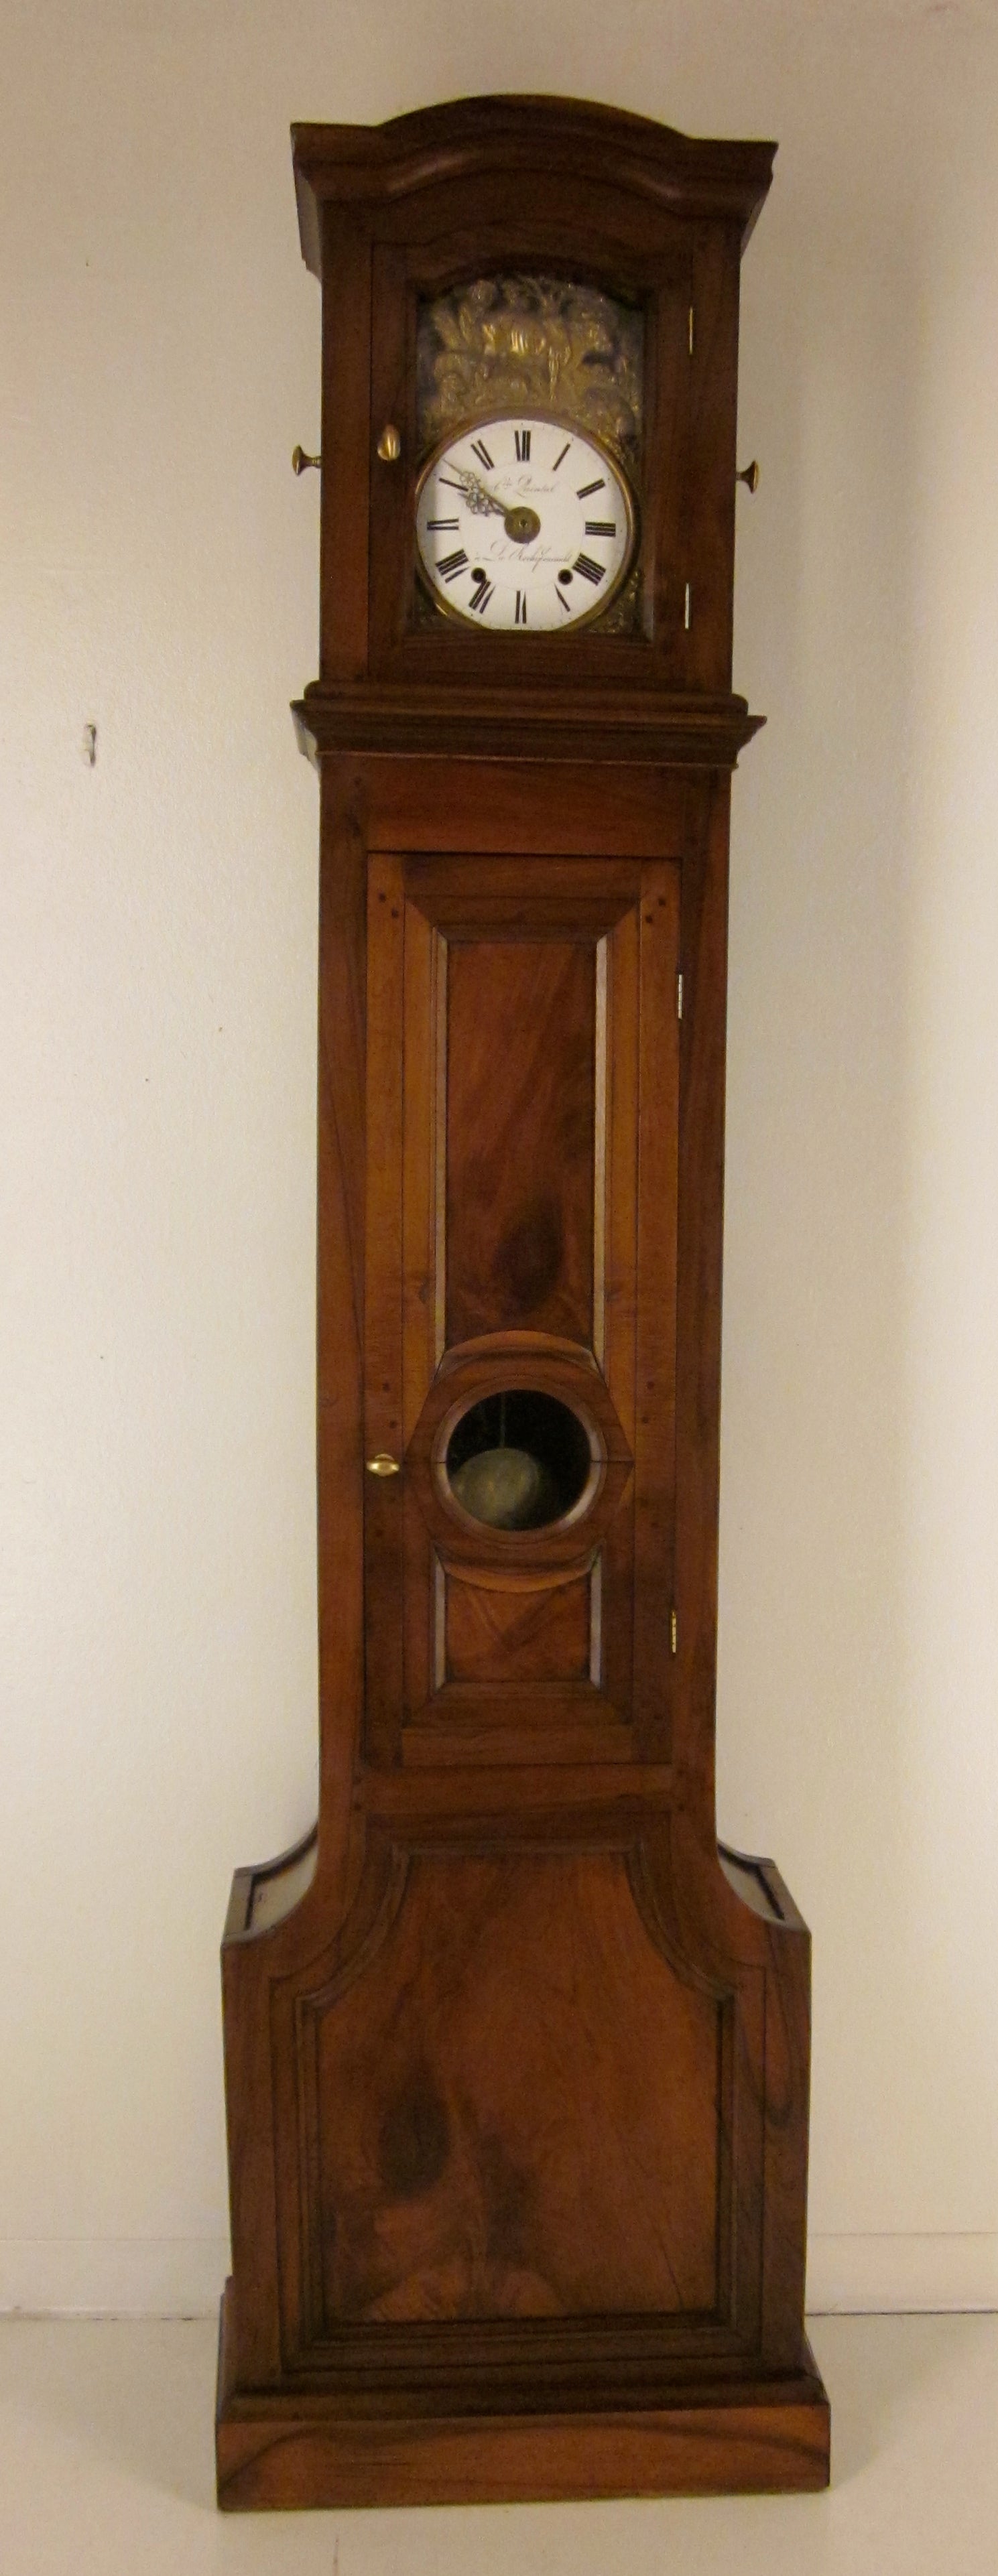 19th. C. French Tall Case Clock or Horloge de Parquet